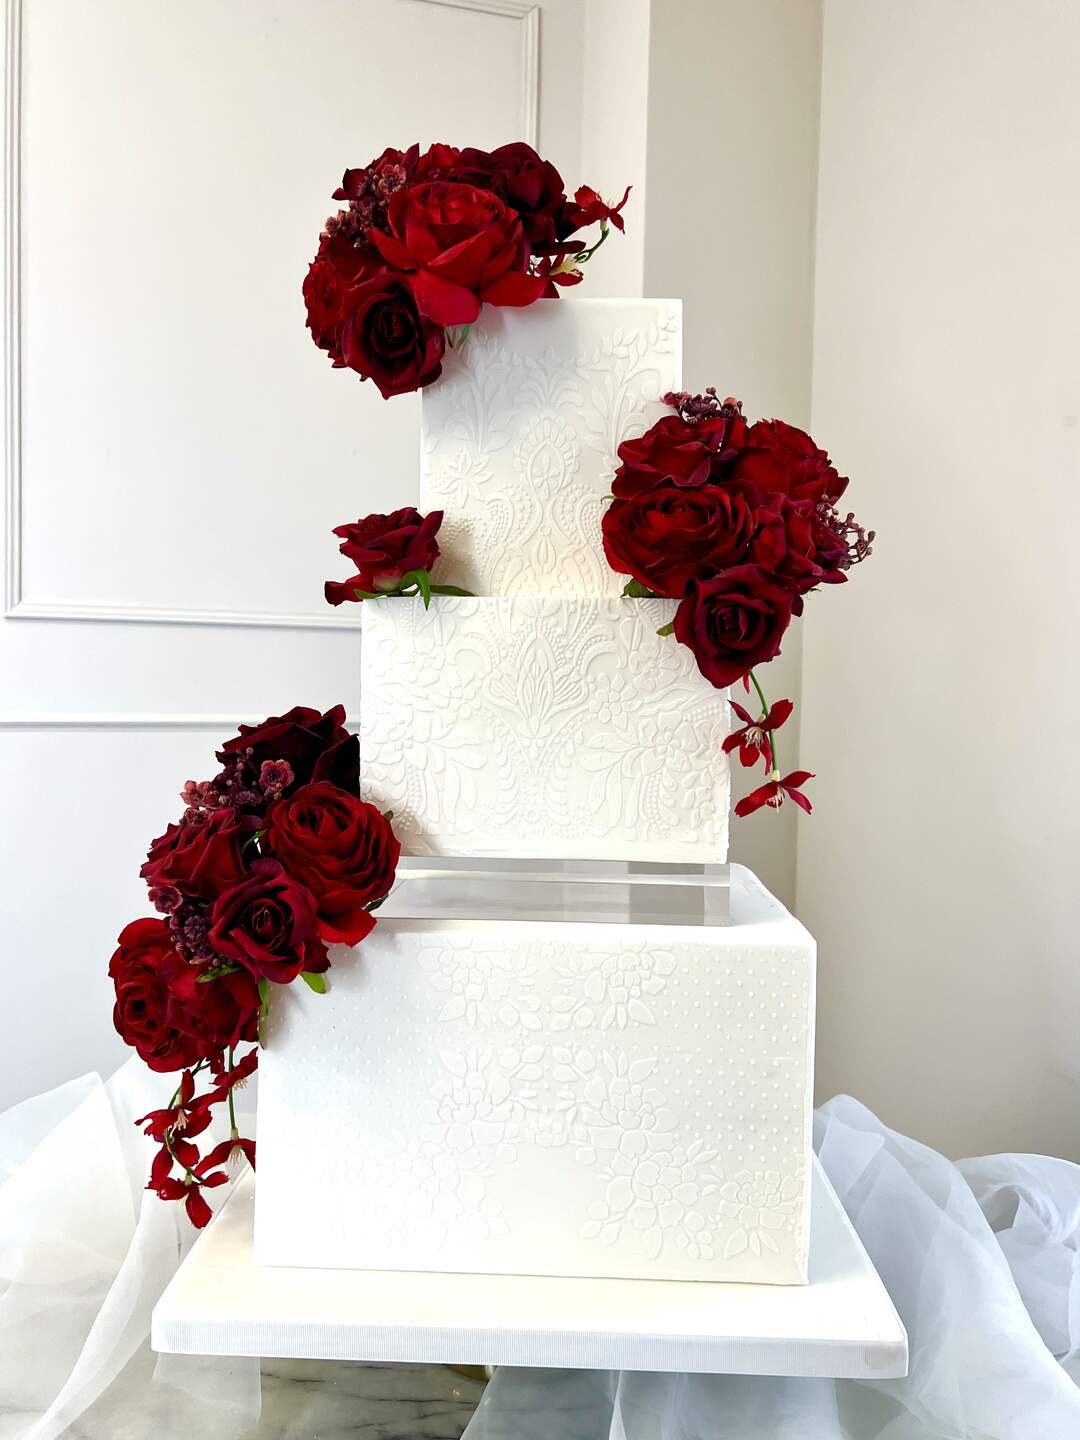 Vegan Wedding Cake Birmingham: Exquisite Creations by One Cake Street